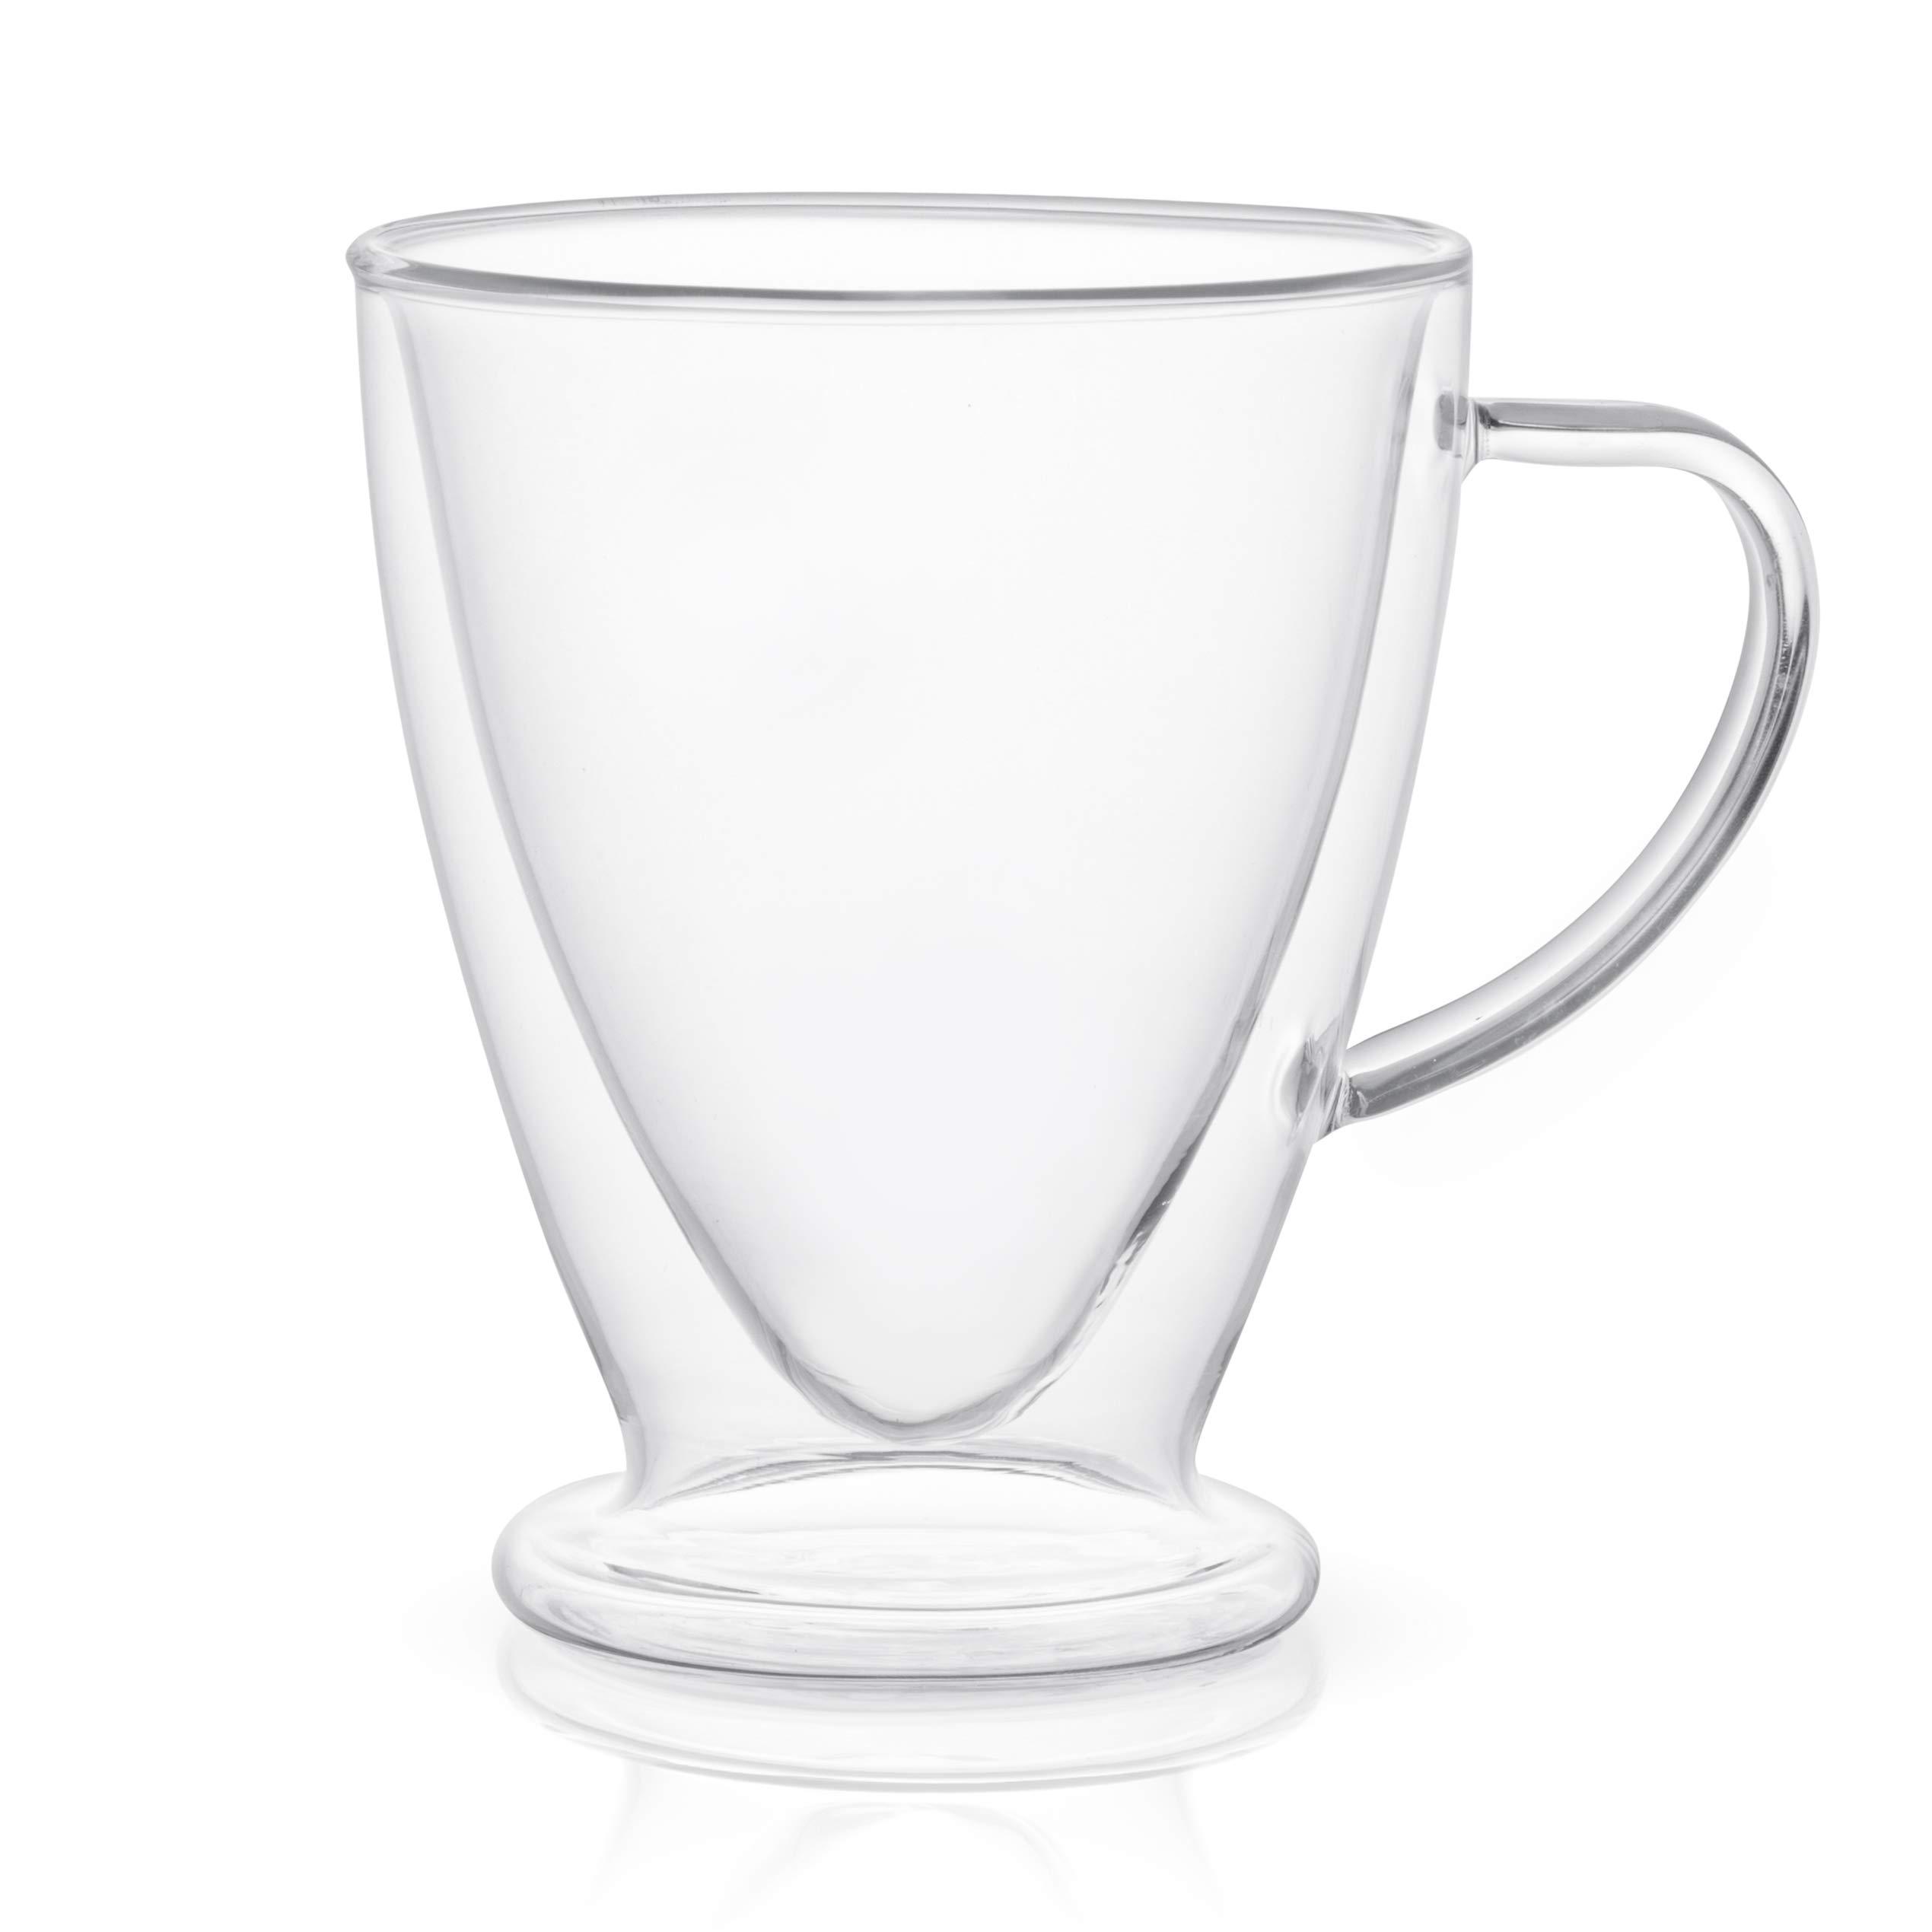 joyjolt declan irish double wall insulated glass coffee cups (set of 2) -15-ounces